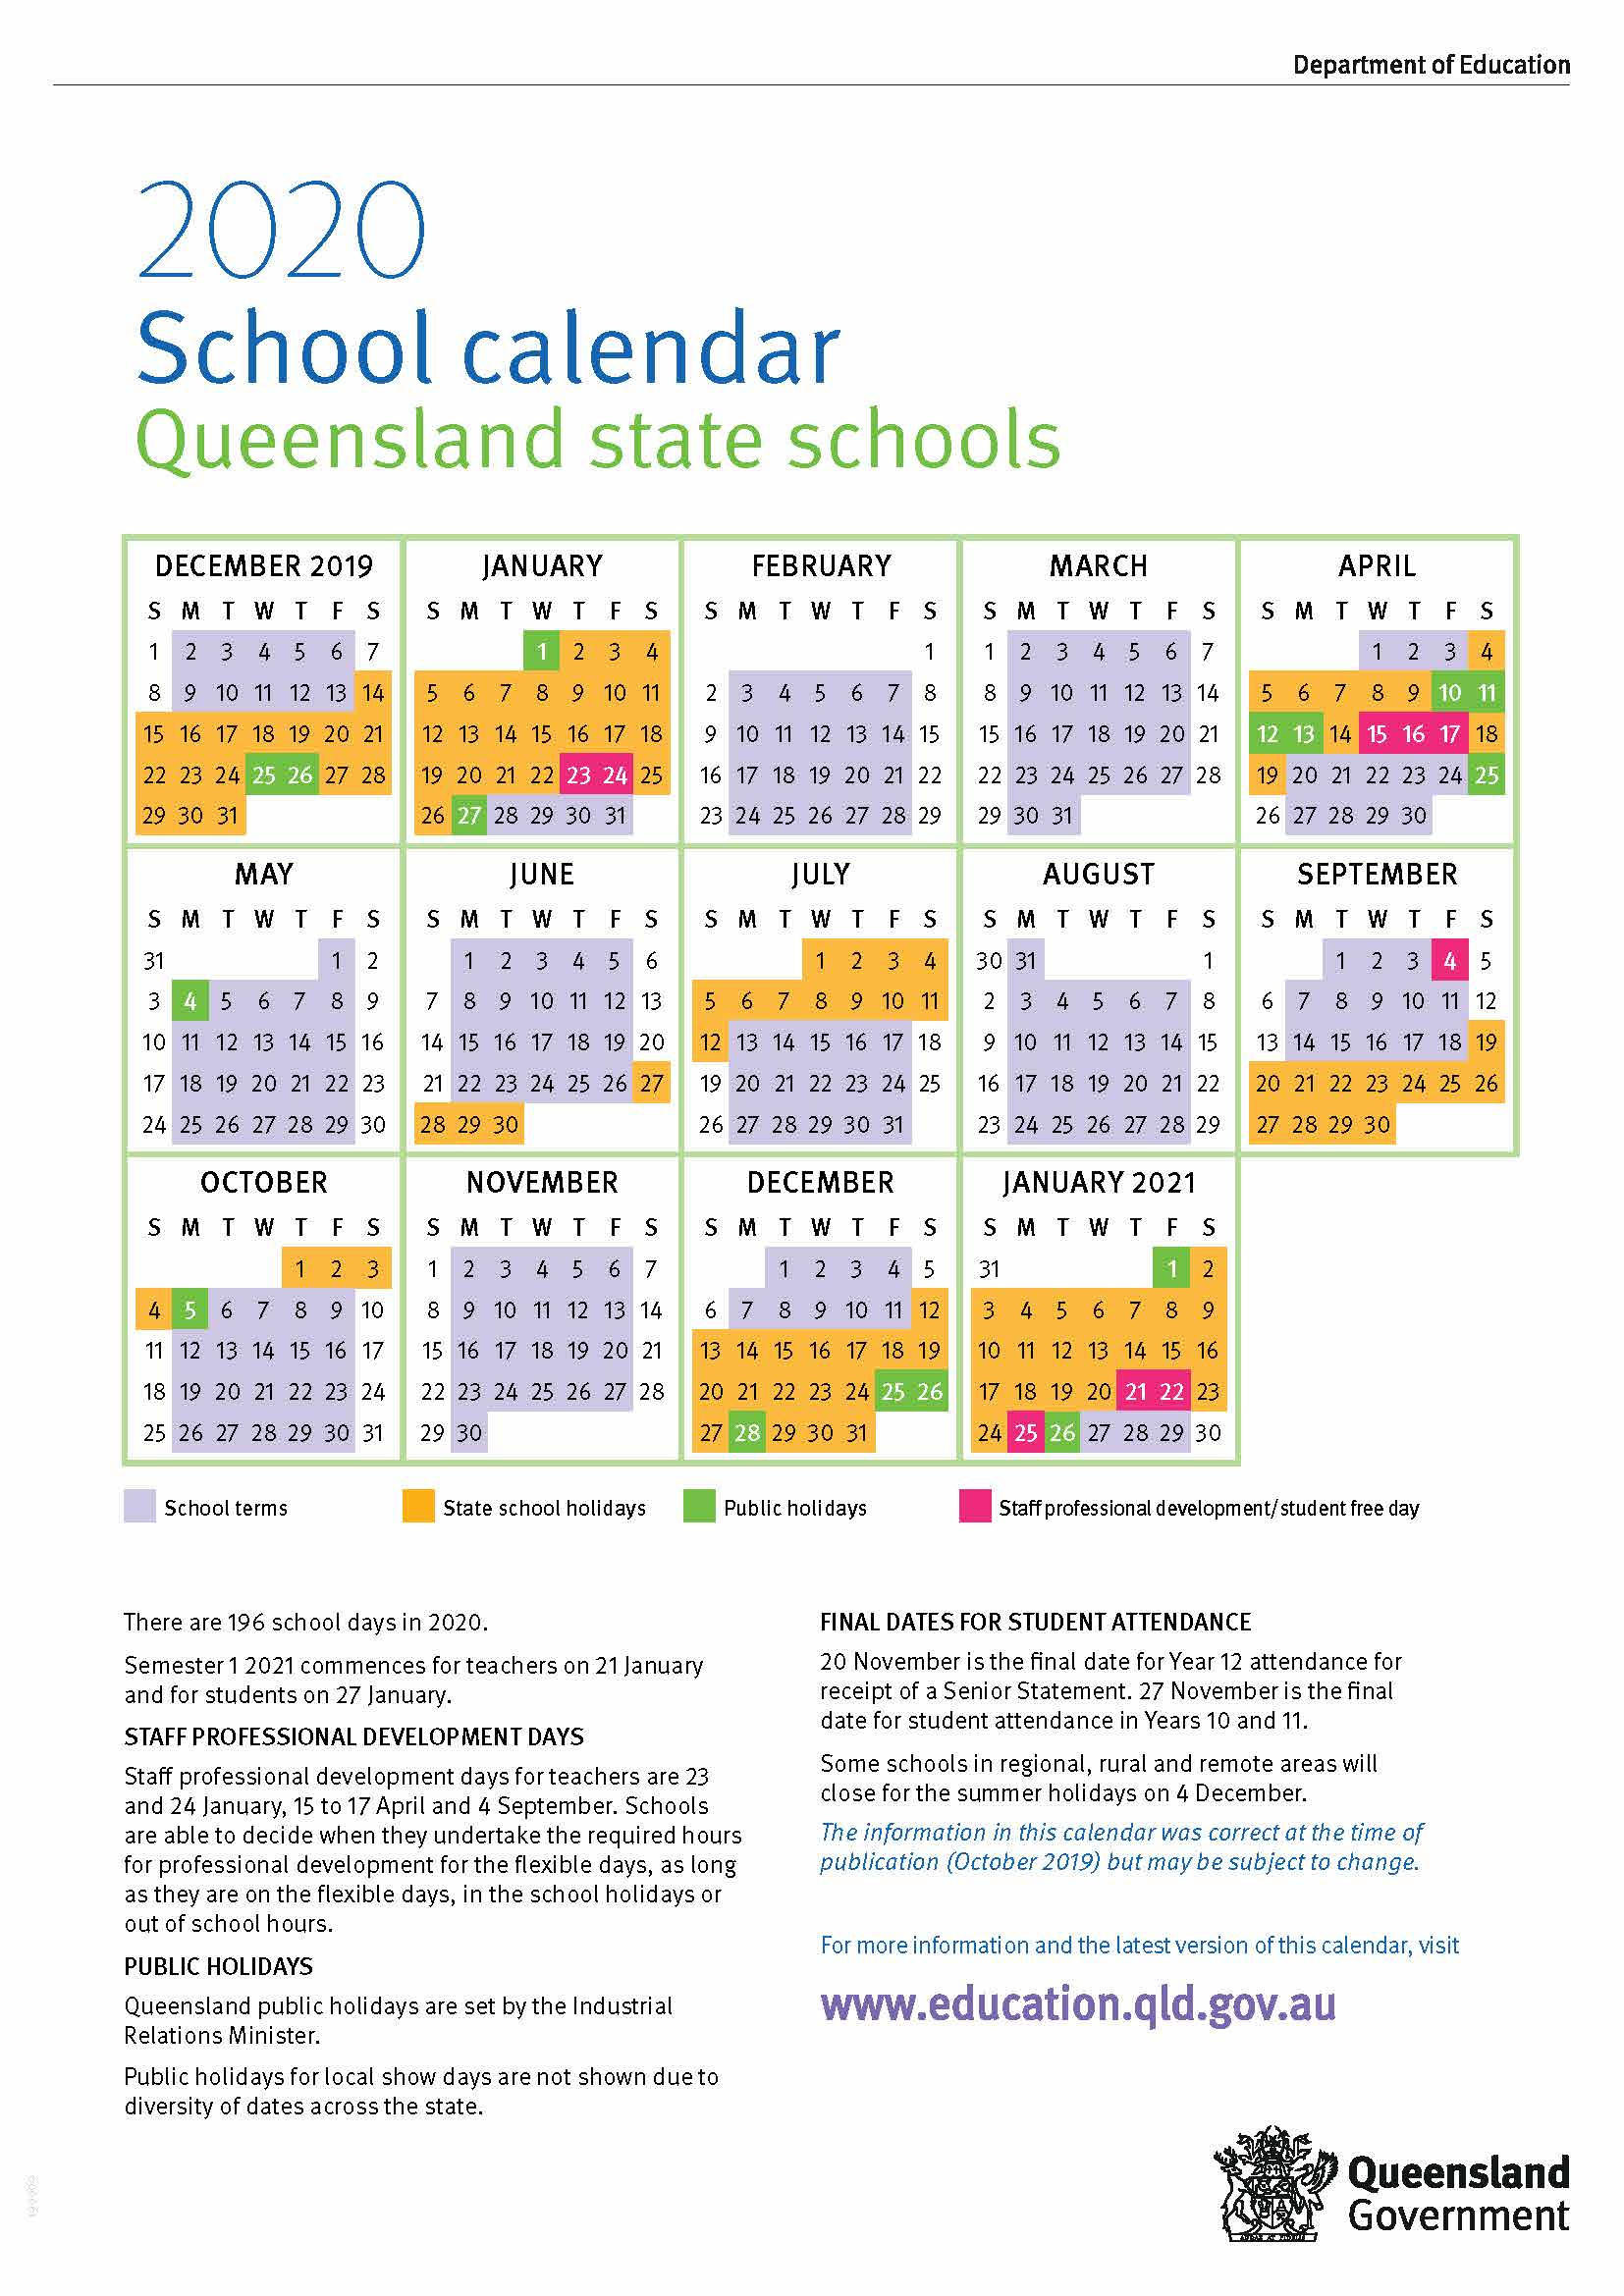 2020 Queensland State School Calendar